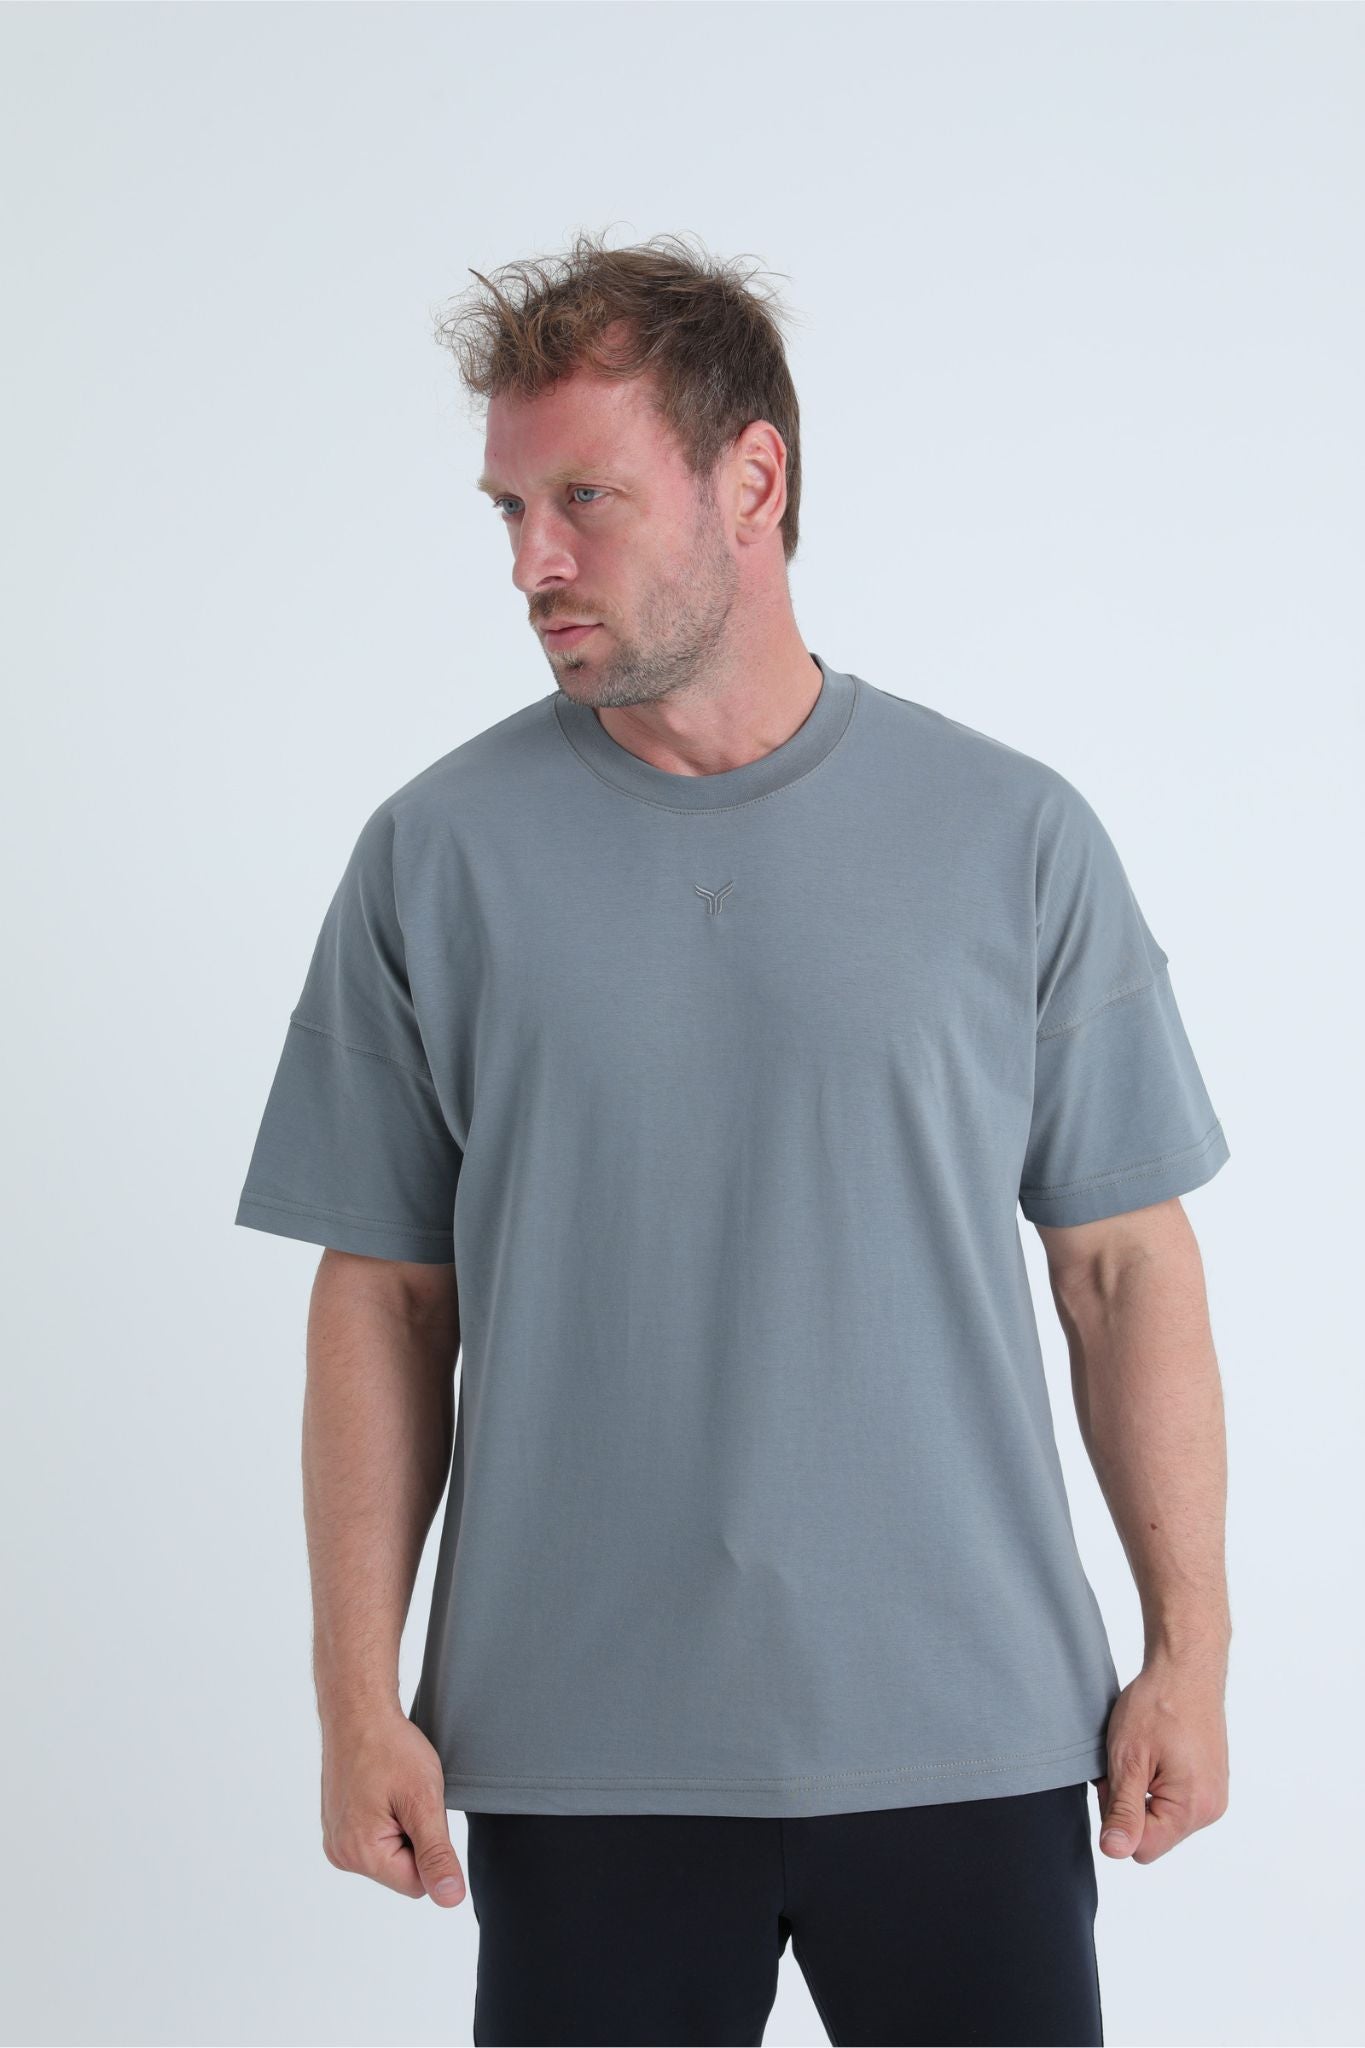 Formeno oversized T-shirt